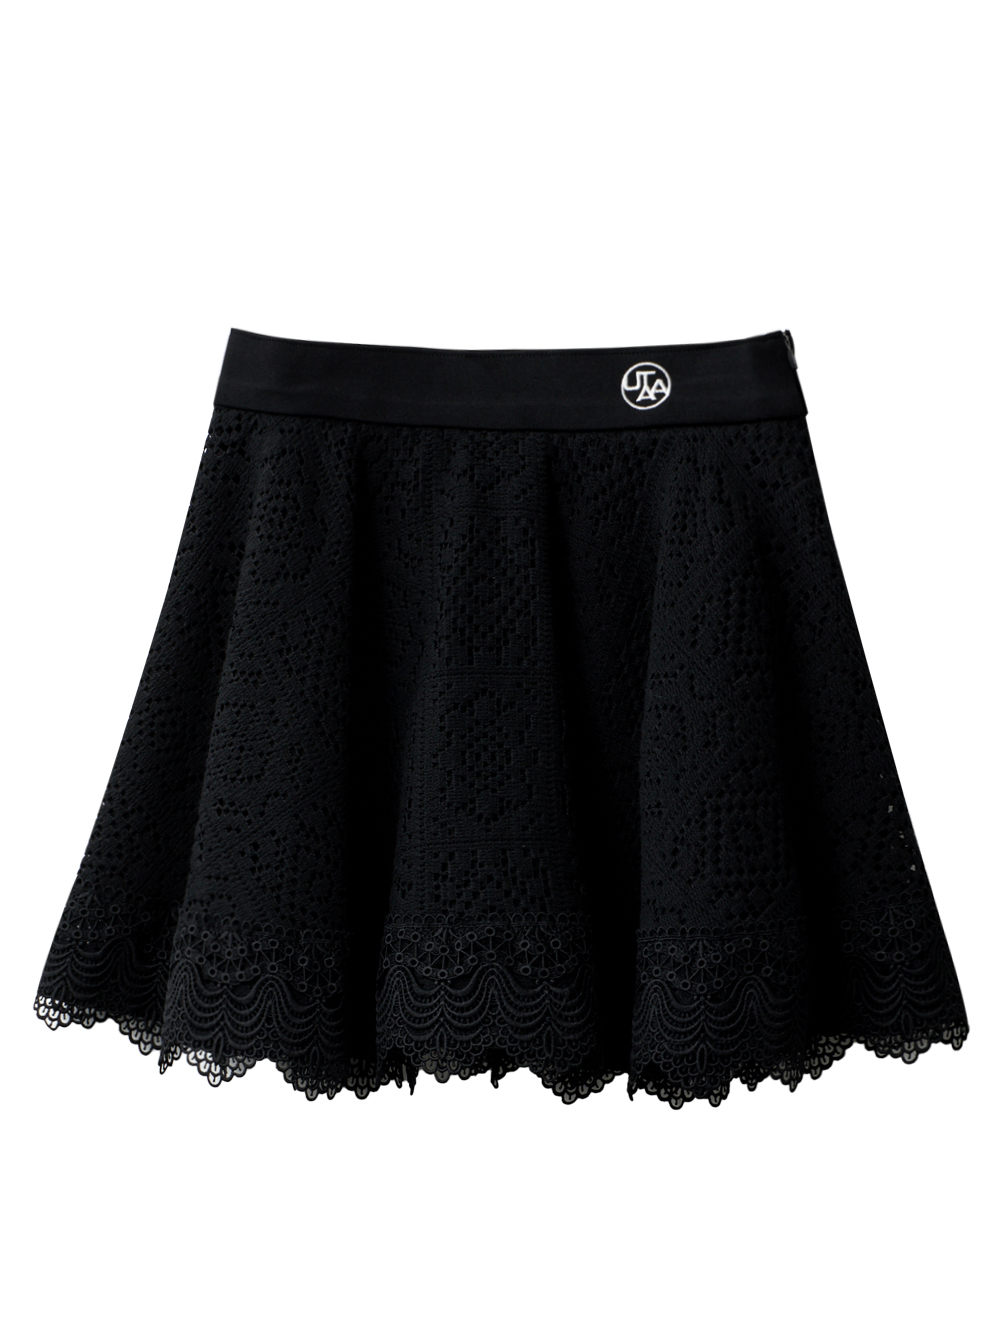 UTAA Pixel Tile Lace Flare Skirt :  Black(UC3SSF412BK)